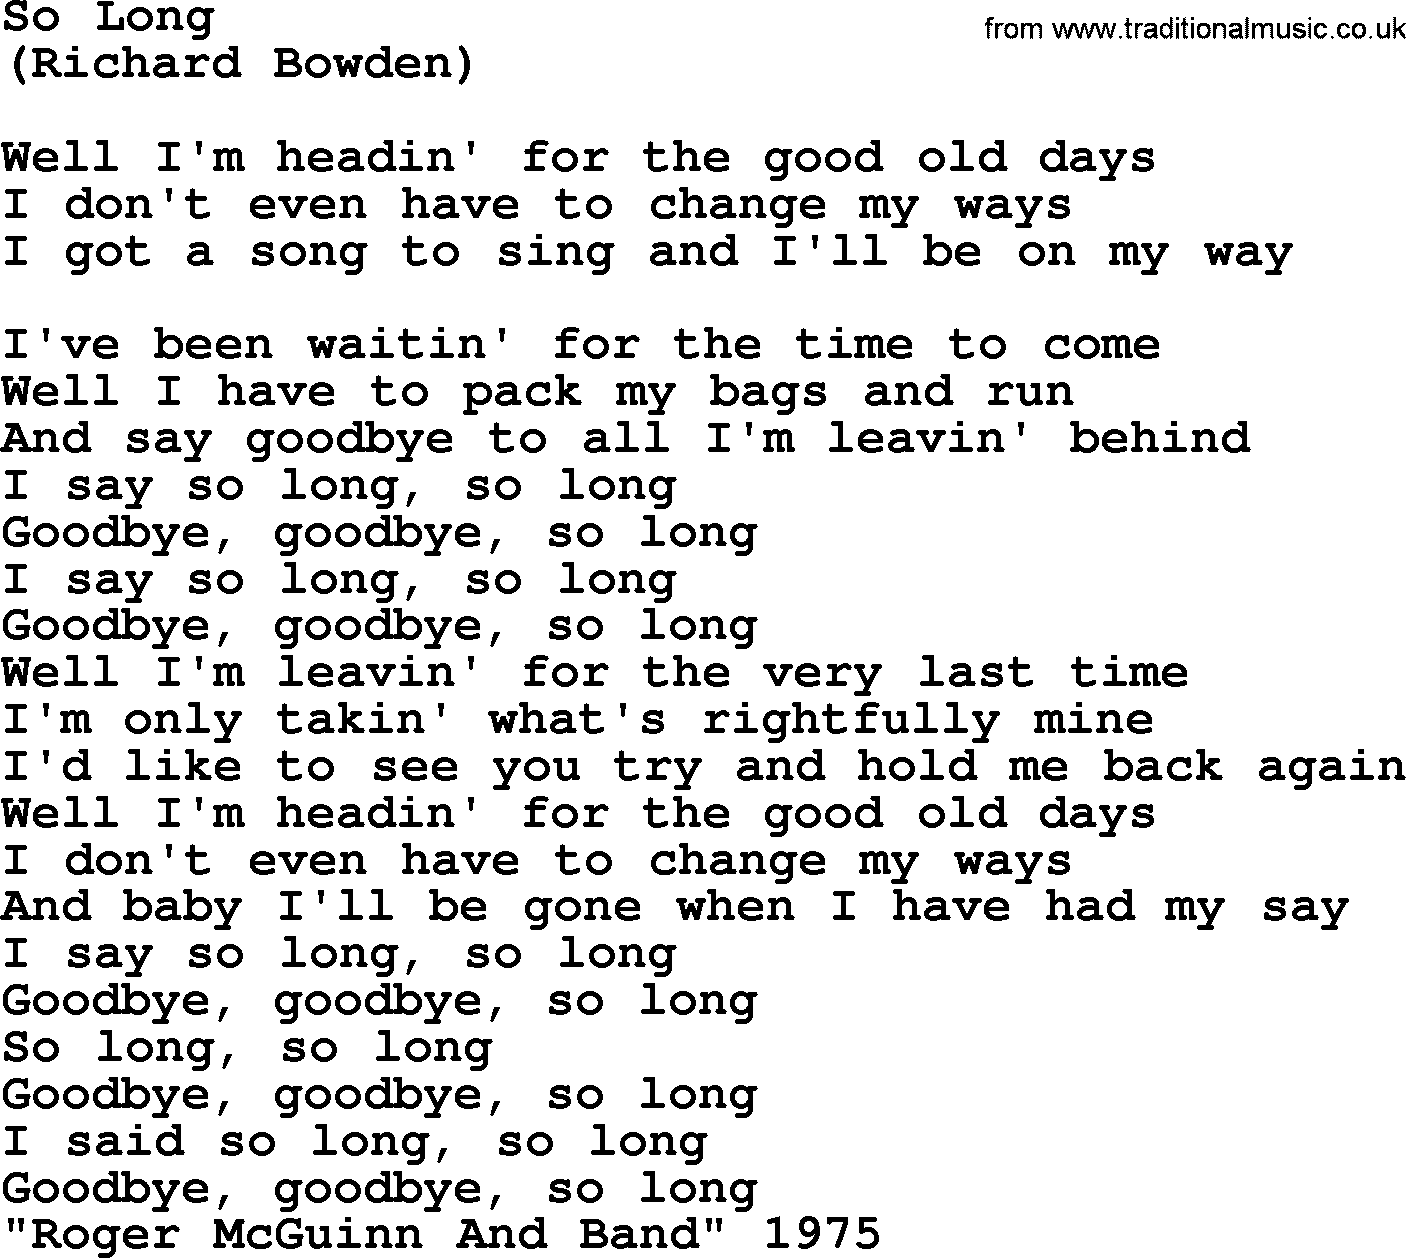 The Byrds song So Long, lyrics